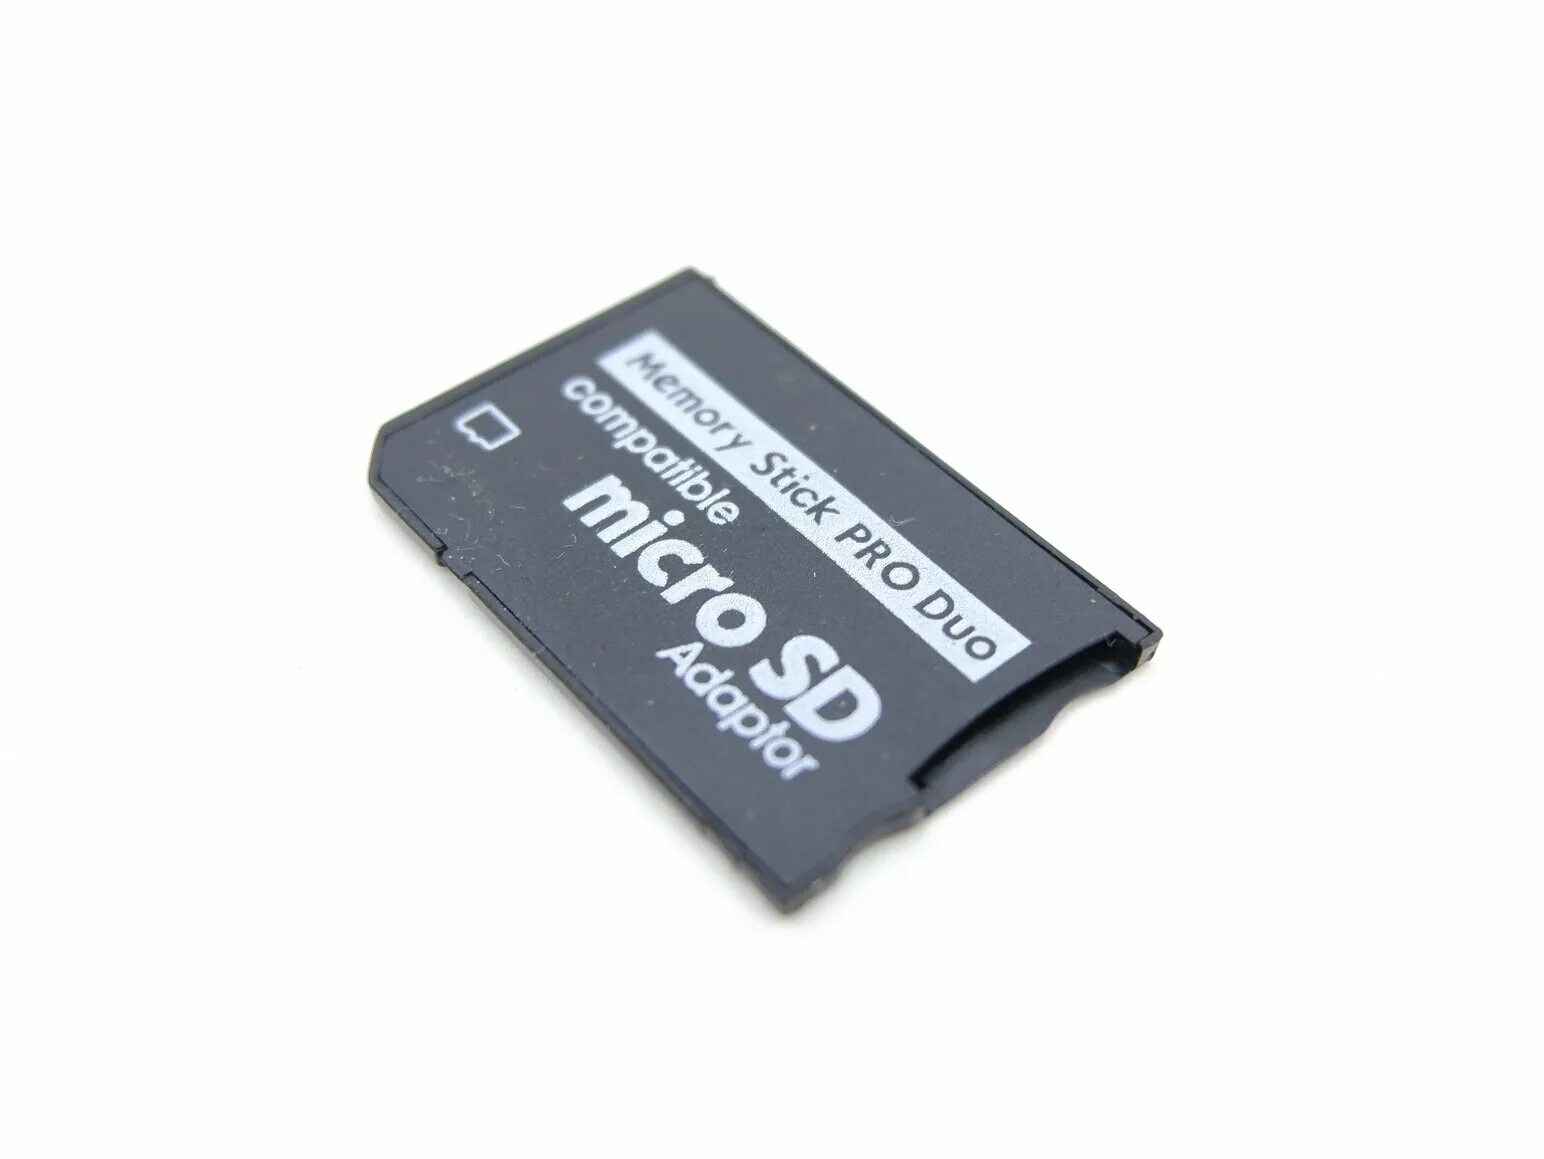 Pro duo купить. Sony Memory Stick Pro Duo адаптер переходник. Адаптер Pro Duo - MICROSD. Memory Stick Pro Duo адаптер MICROSD. Адаптер для карты памяти Sony Memory Stick Pro Duo 1gb.